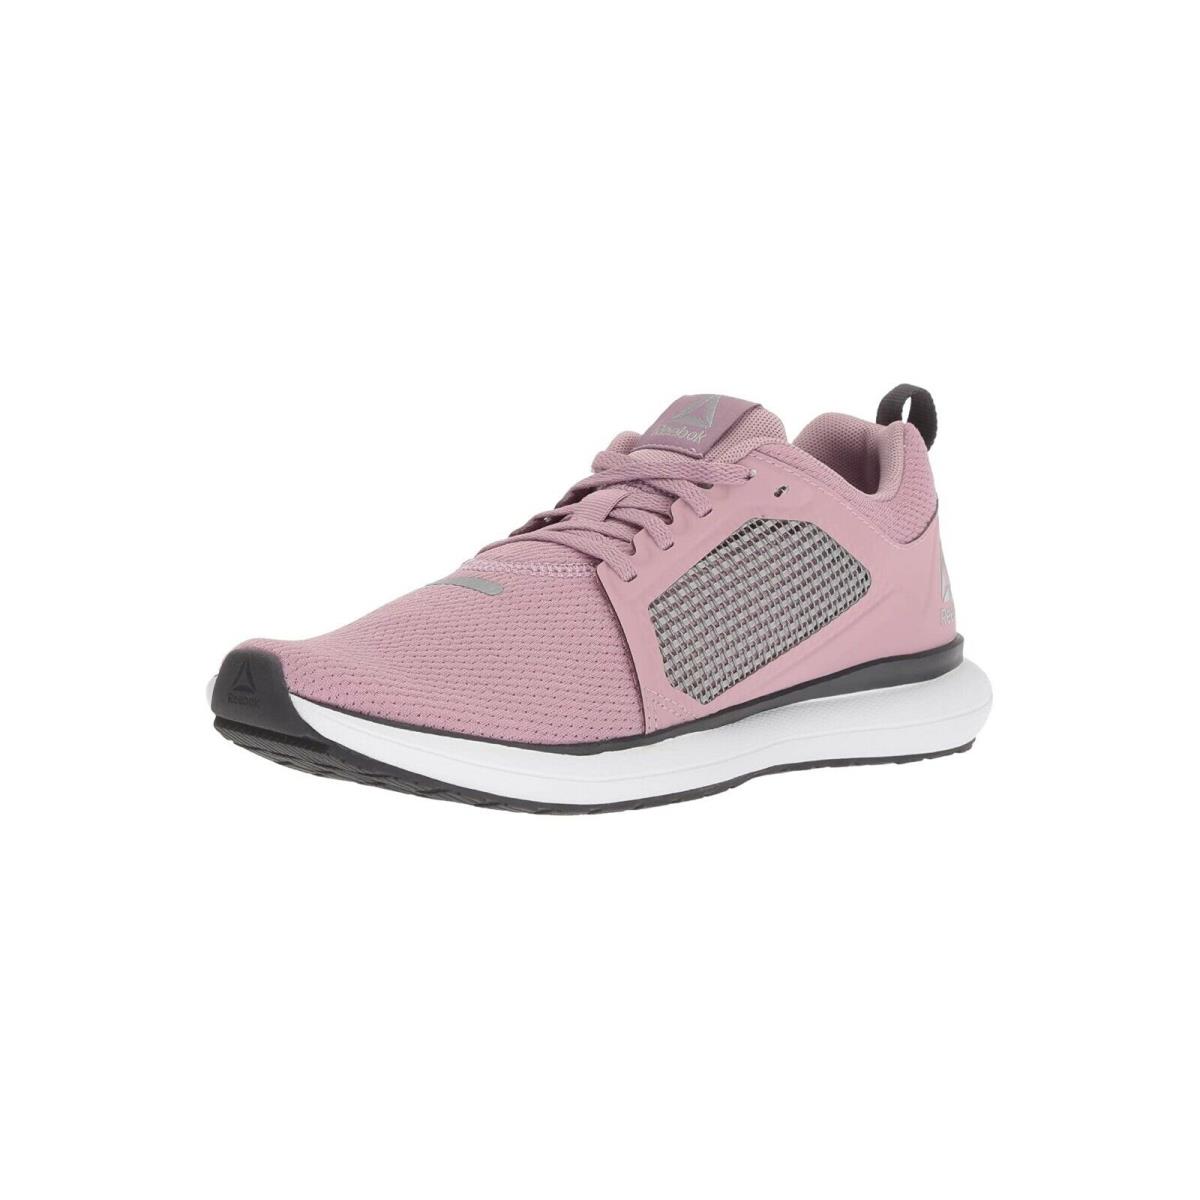 Reebok Driftium Ride Violet Lilac Pink Knit Running Shoes Women Sneakers